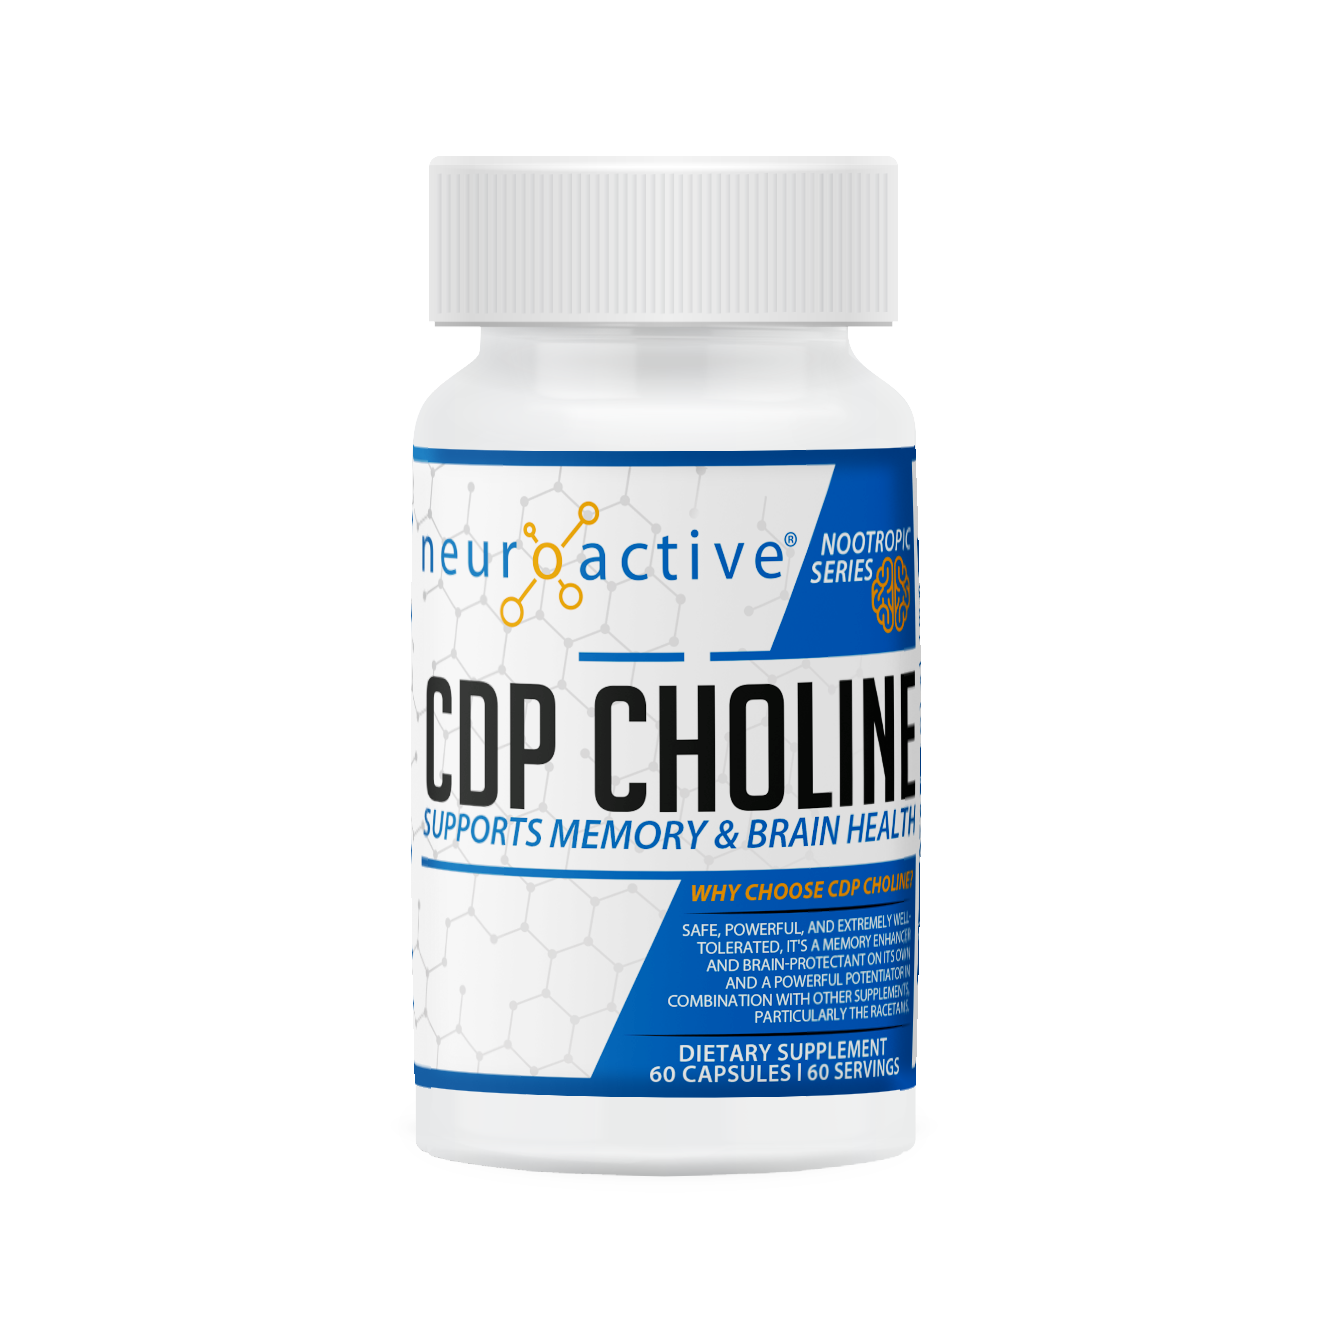 NeuroActive CDP Choline